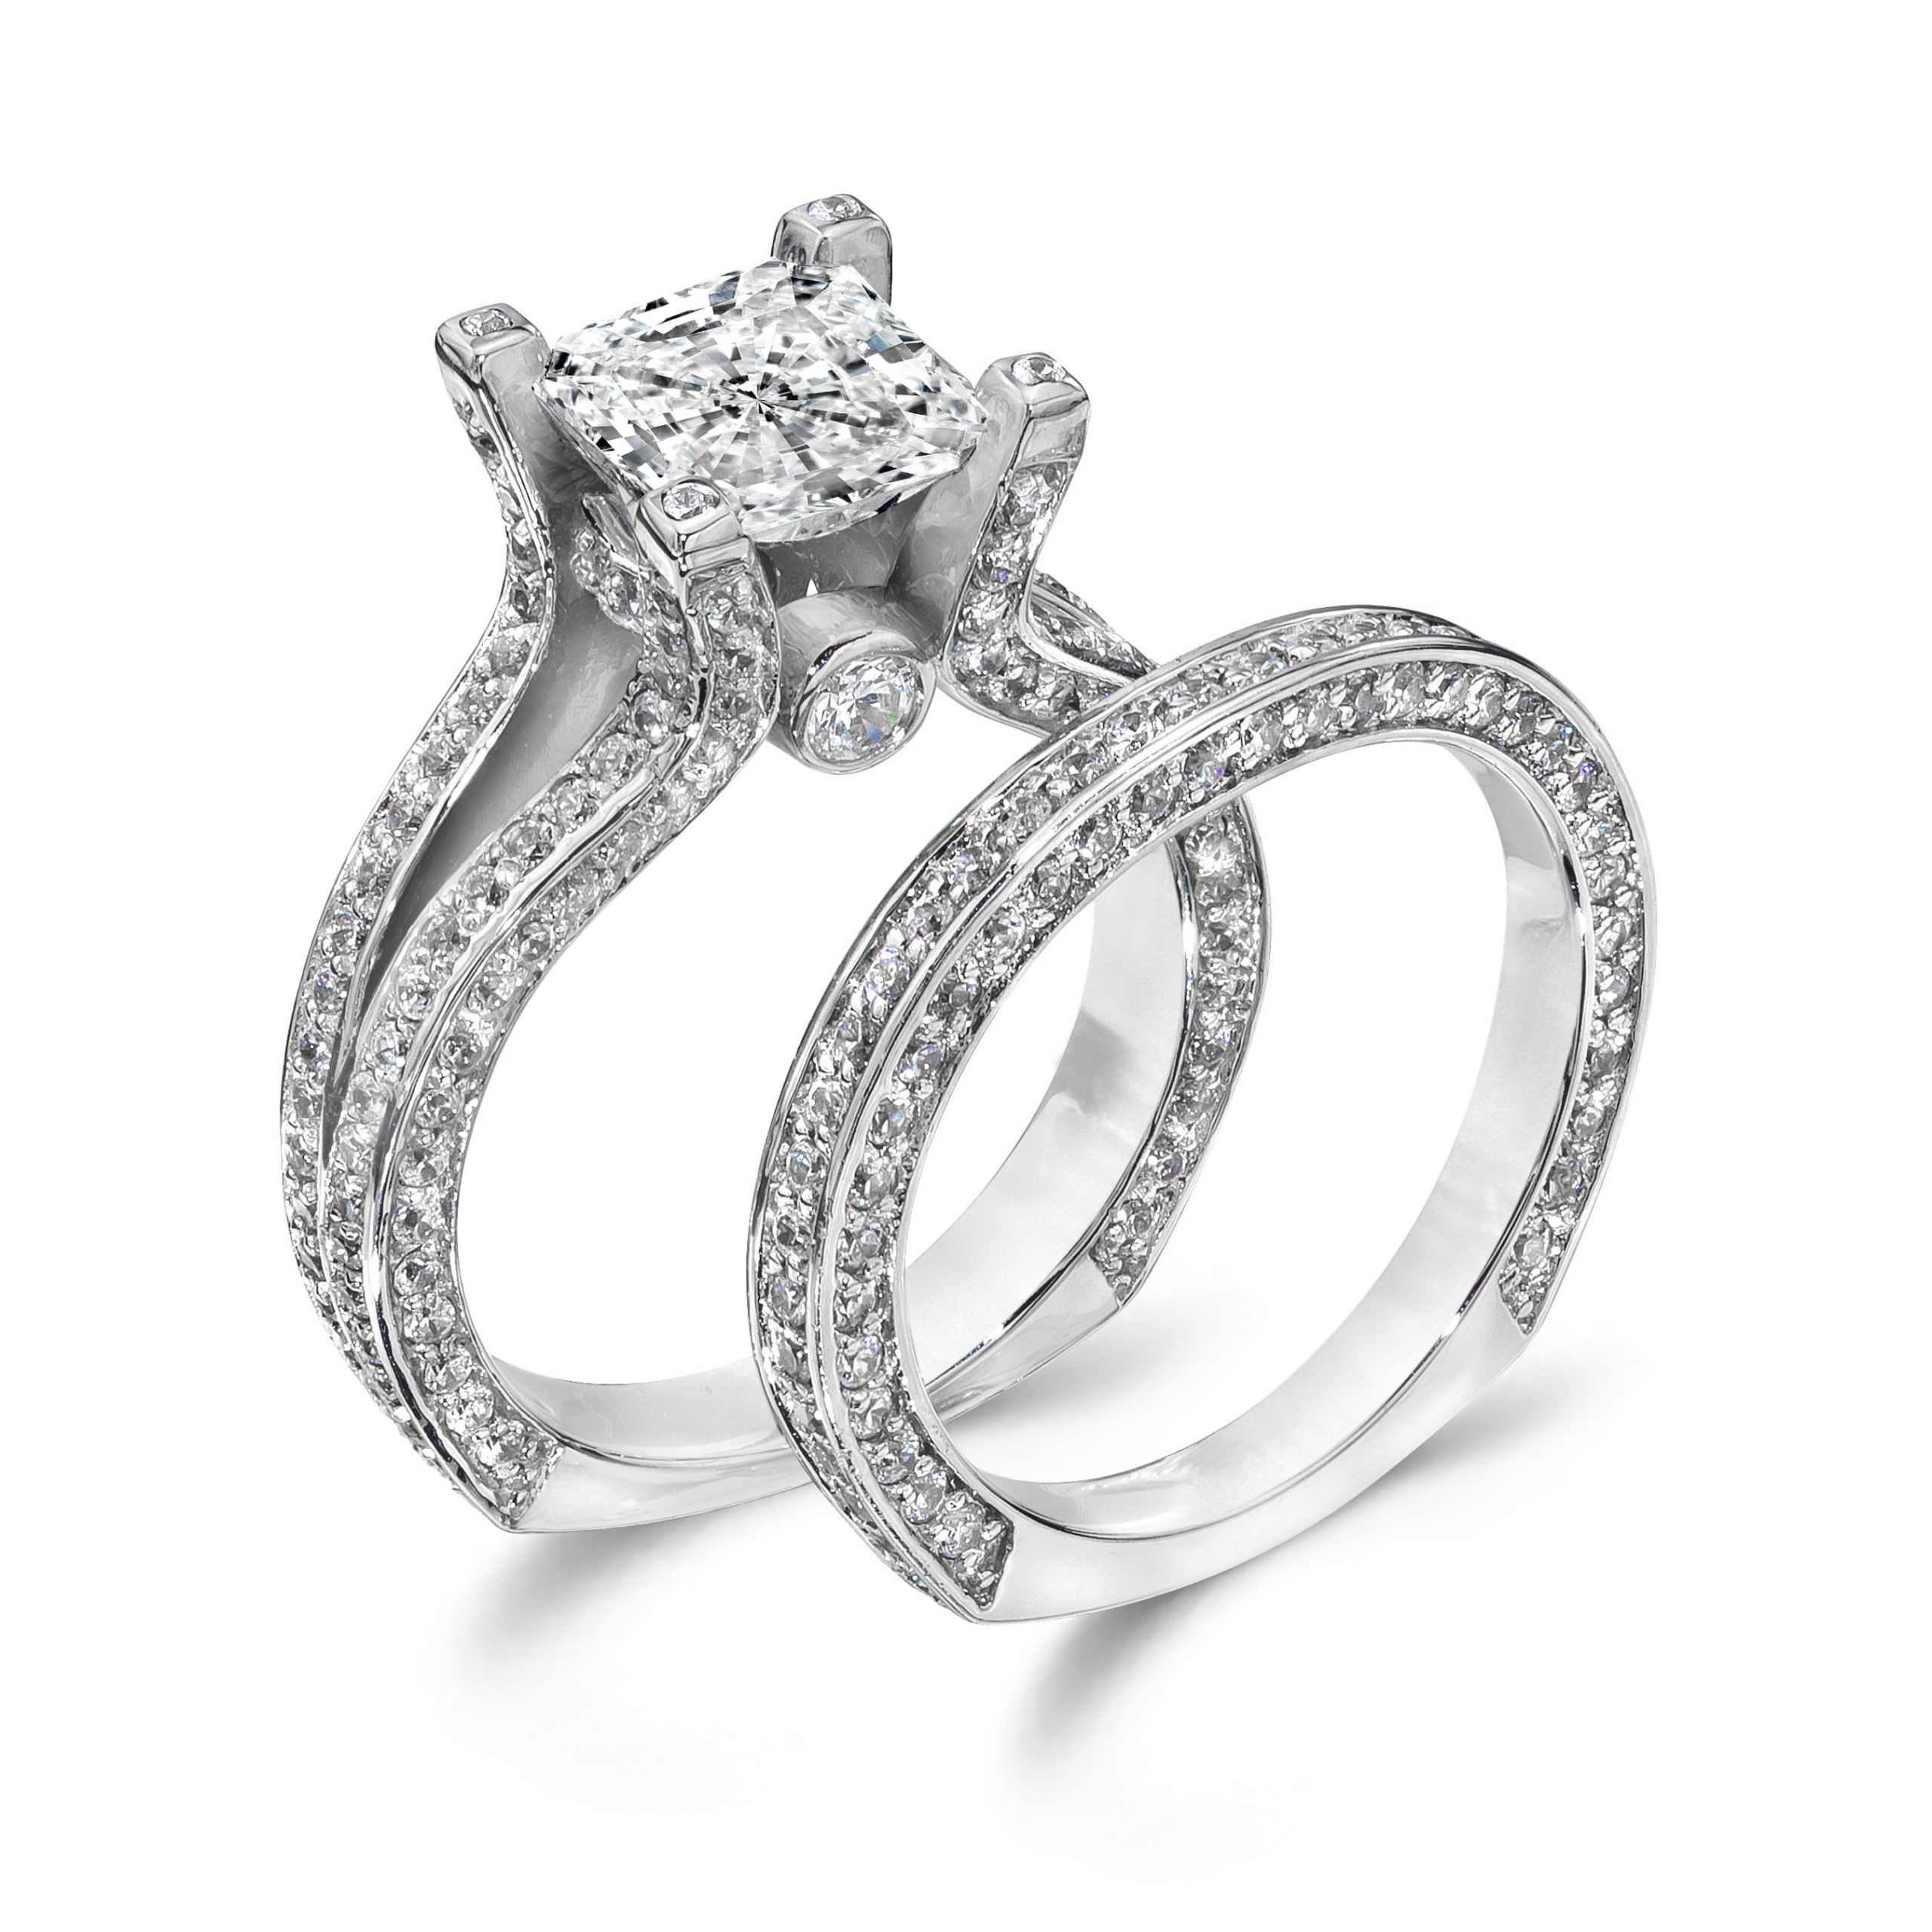 Weddings Rings
 Birkat Elyon Reports a Rise in CZ Wedding Ring Sales as